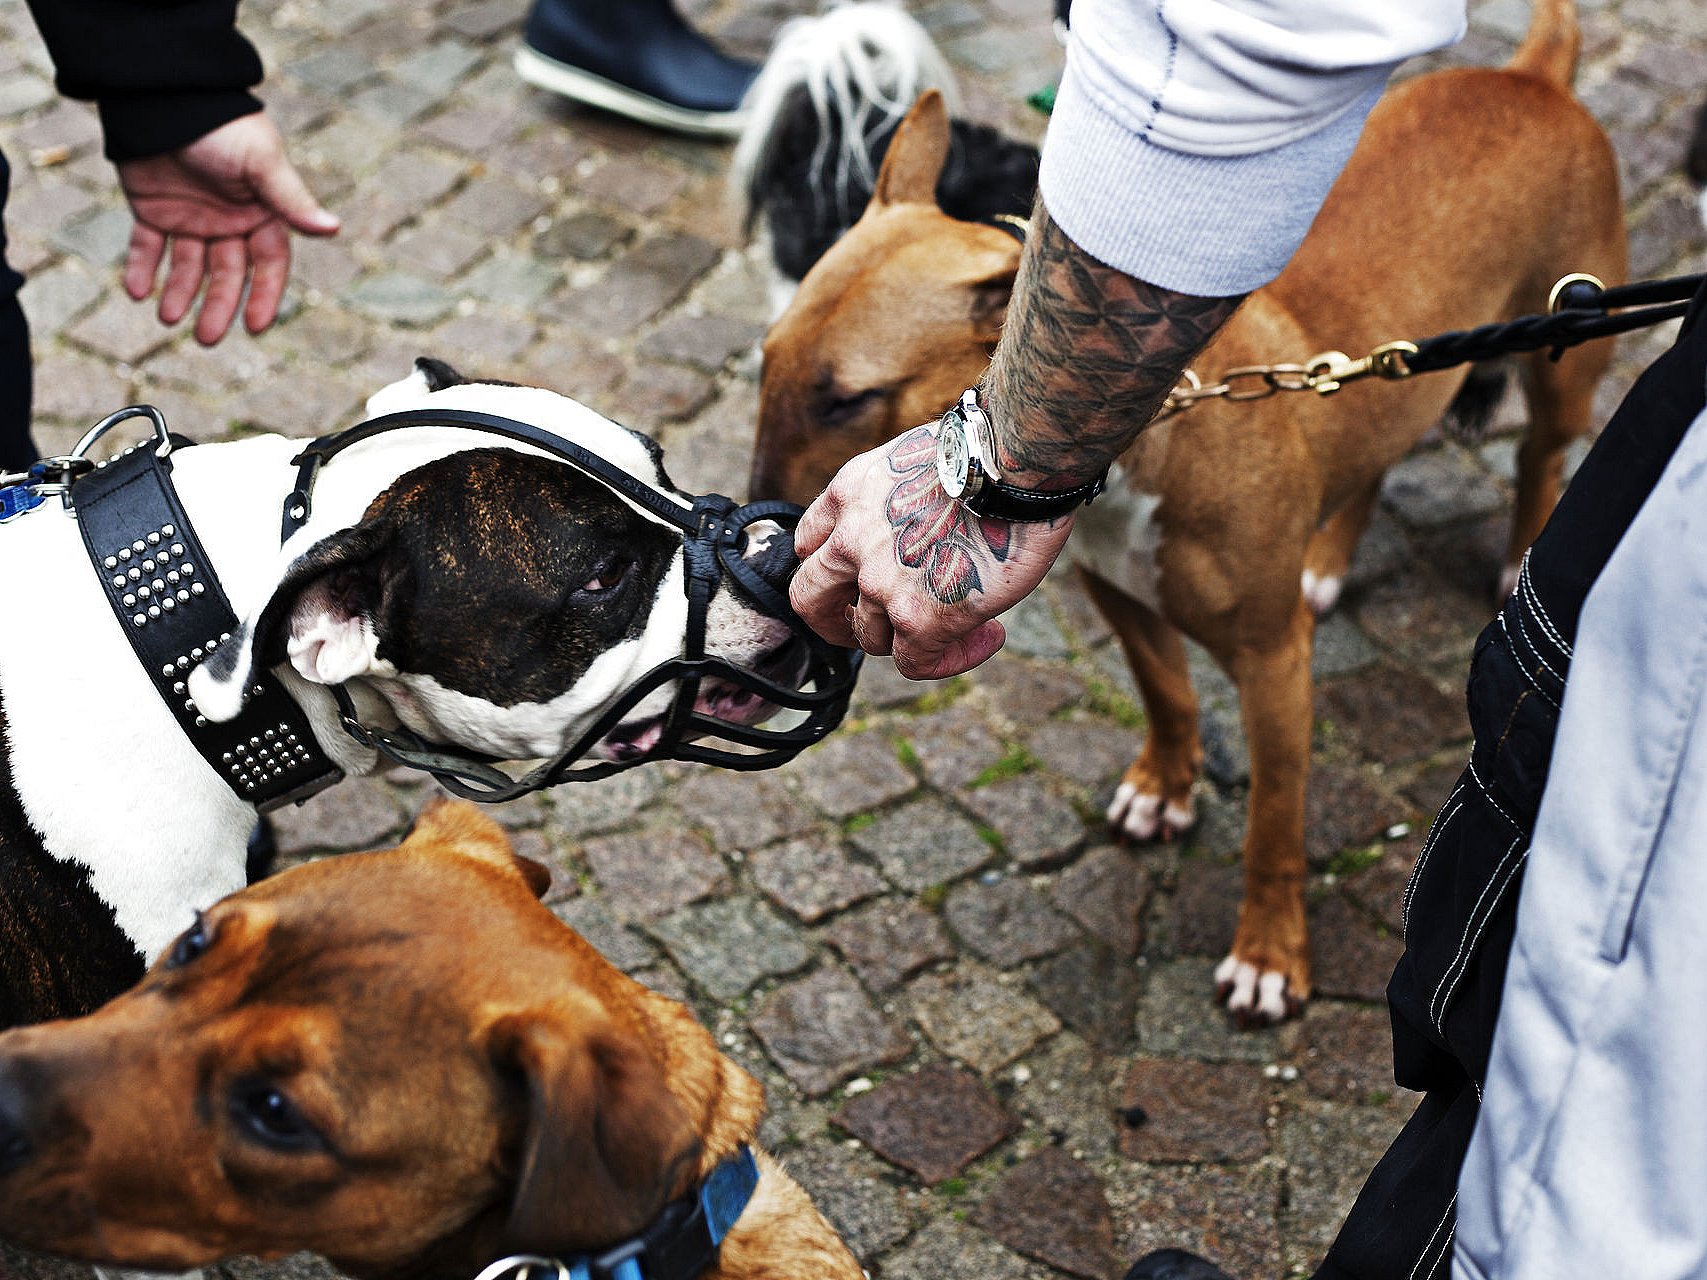 Det er hundedyrt, hvis hund bider andre mennesker: Så meget det | TV 2 Kosmopol